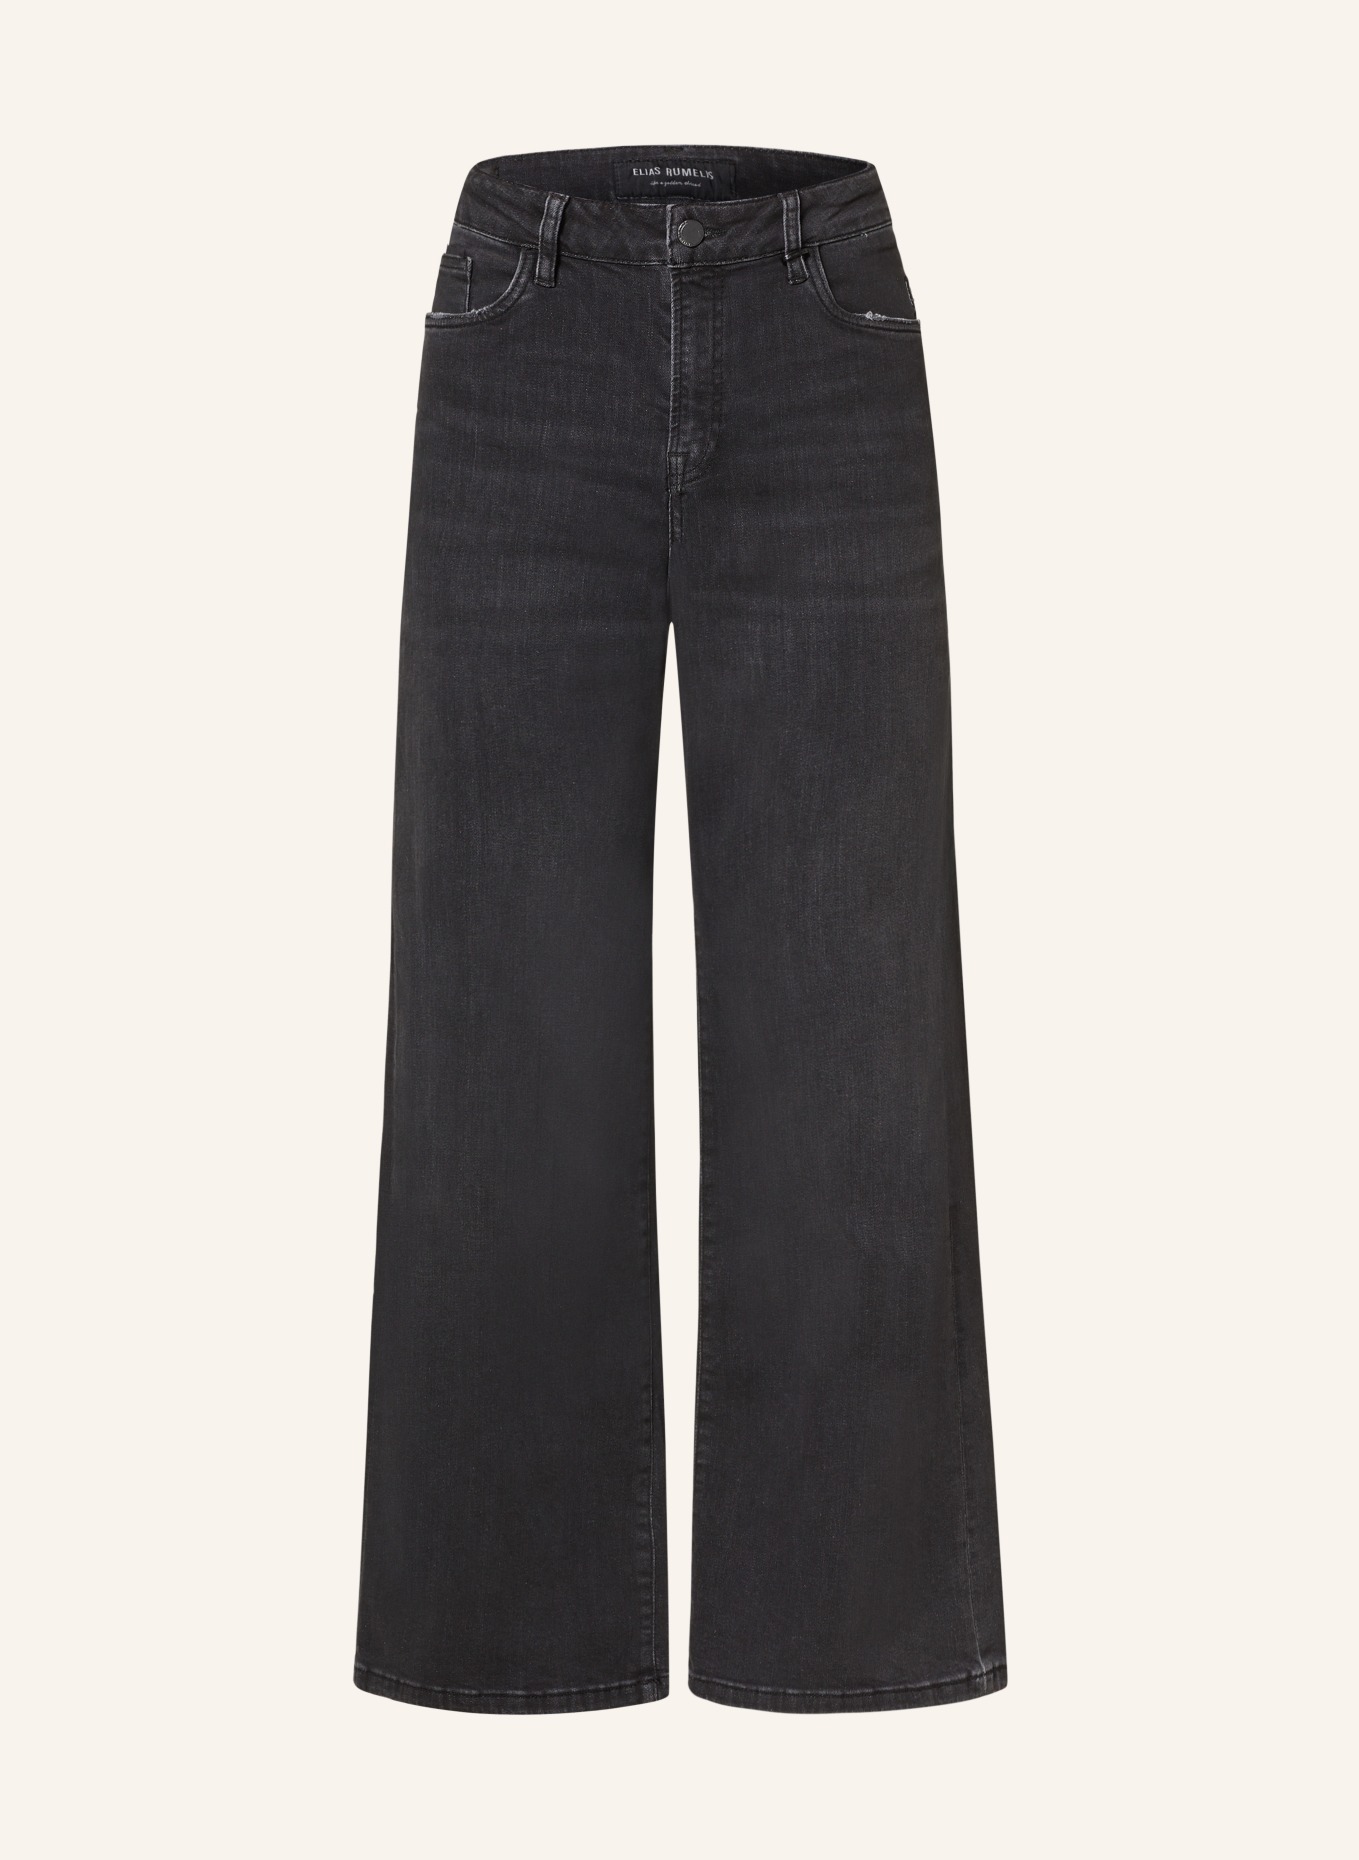 ELIAS RUMELIS Straight Jeans ERKALEA, Farbe: 742 black stonewash (Bild 1)